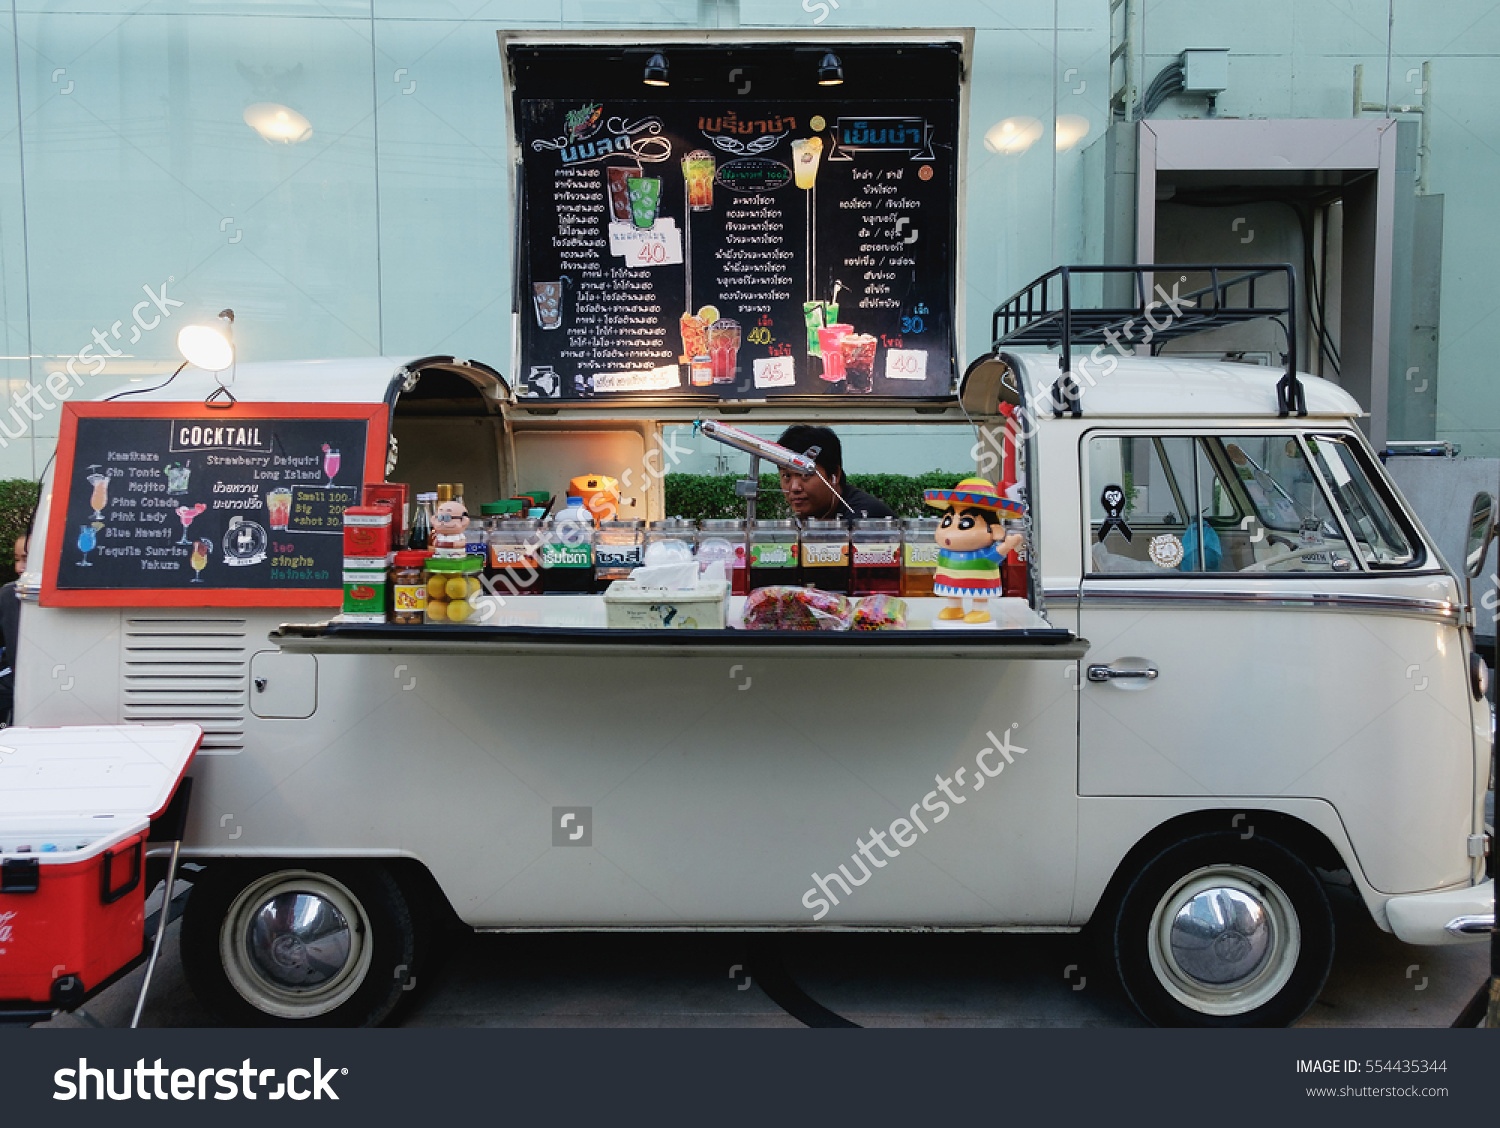 stock-photo-bangkok-thailand-january-food-trucks-parking-for-orders-by-customer-at-food-truck-554435344